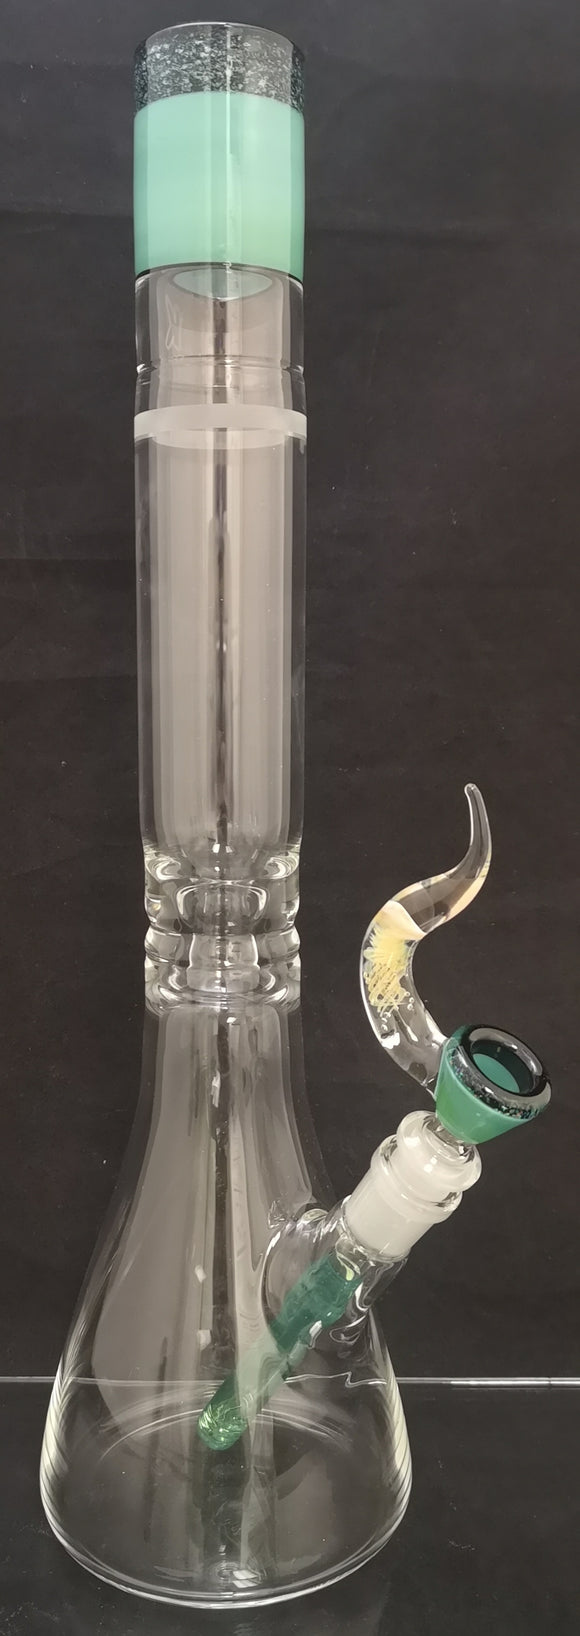 KOBB Glass - Titan V3 Worked Beaker w/ Matching Downstem & Bowl (1 Hole) - Green w/ Crushed Opal Accents - $550